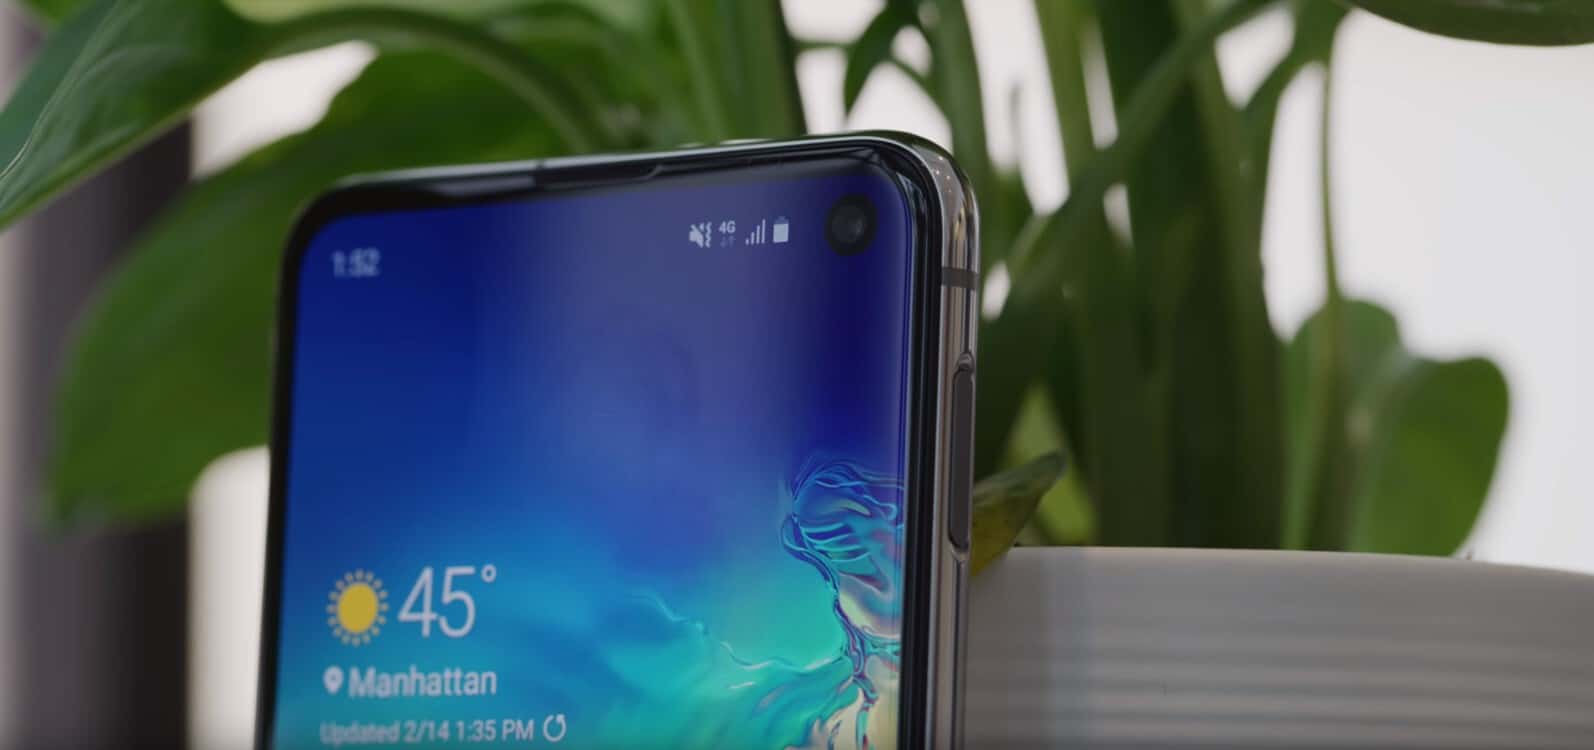 Samsung Unpacked roundup: A 10th Anniversary bonanza of stuff - OnMSFT.com - February 21, 2019